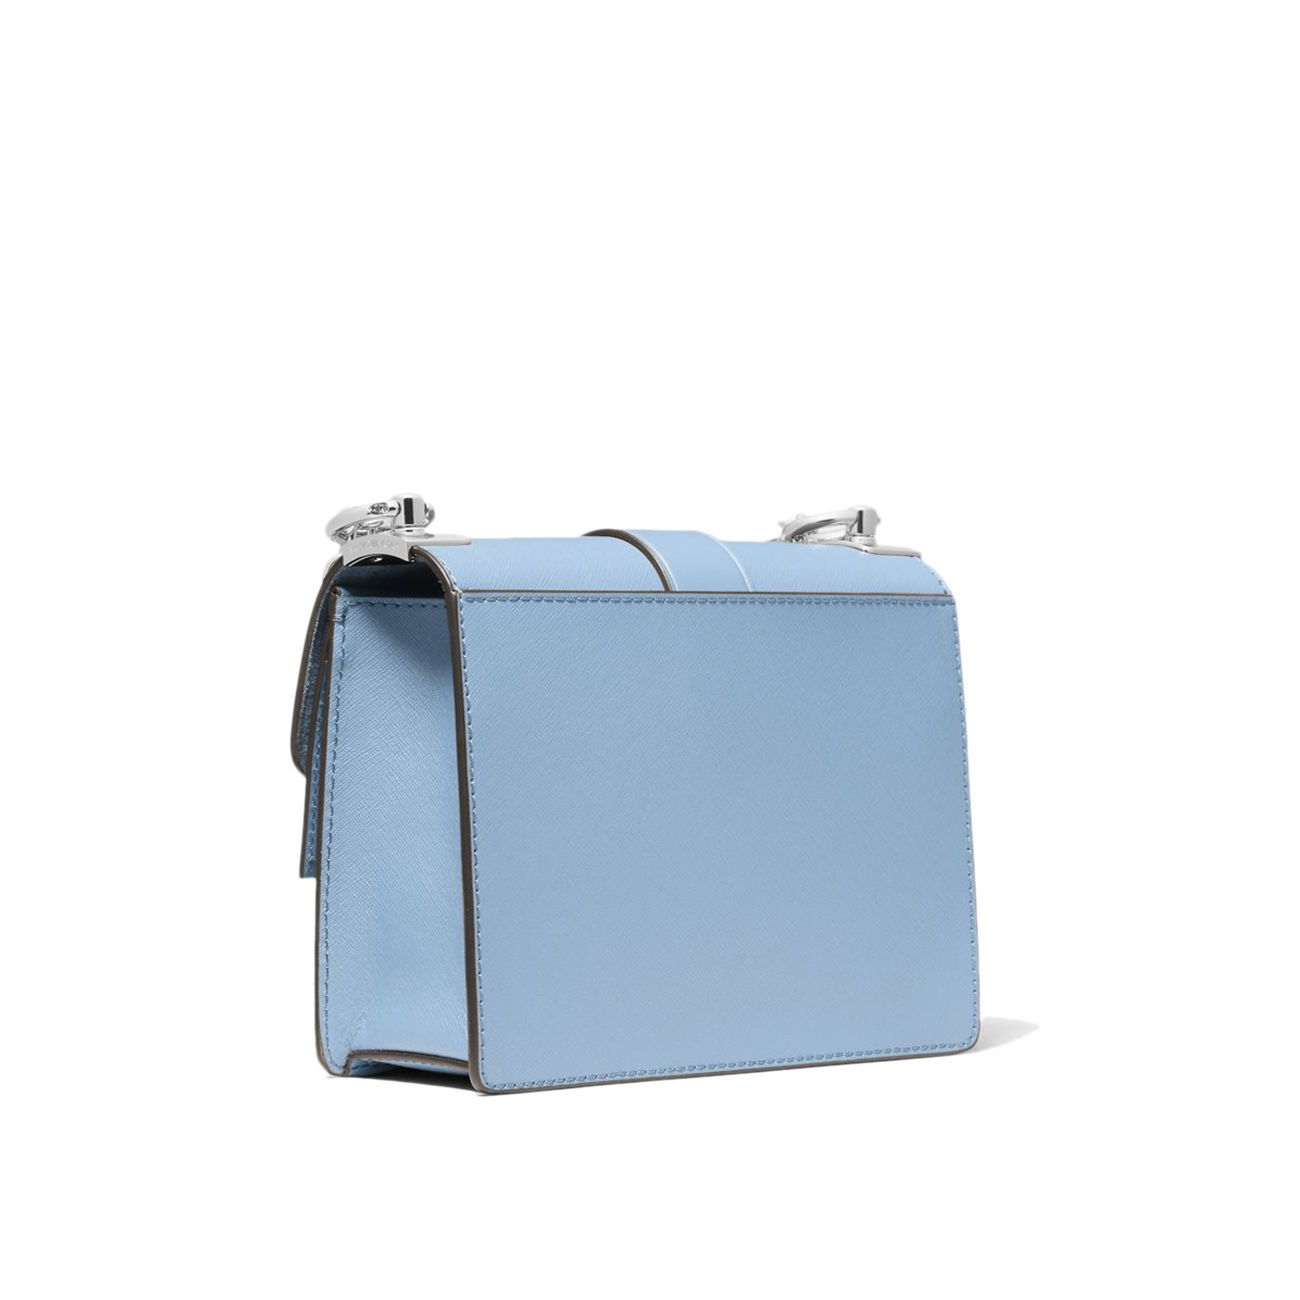 Michael Kors Greenwich Convertible Shoulder Bag - Pale Blue